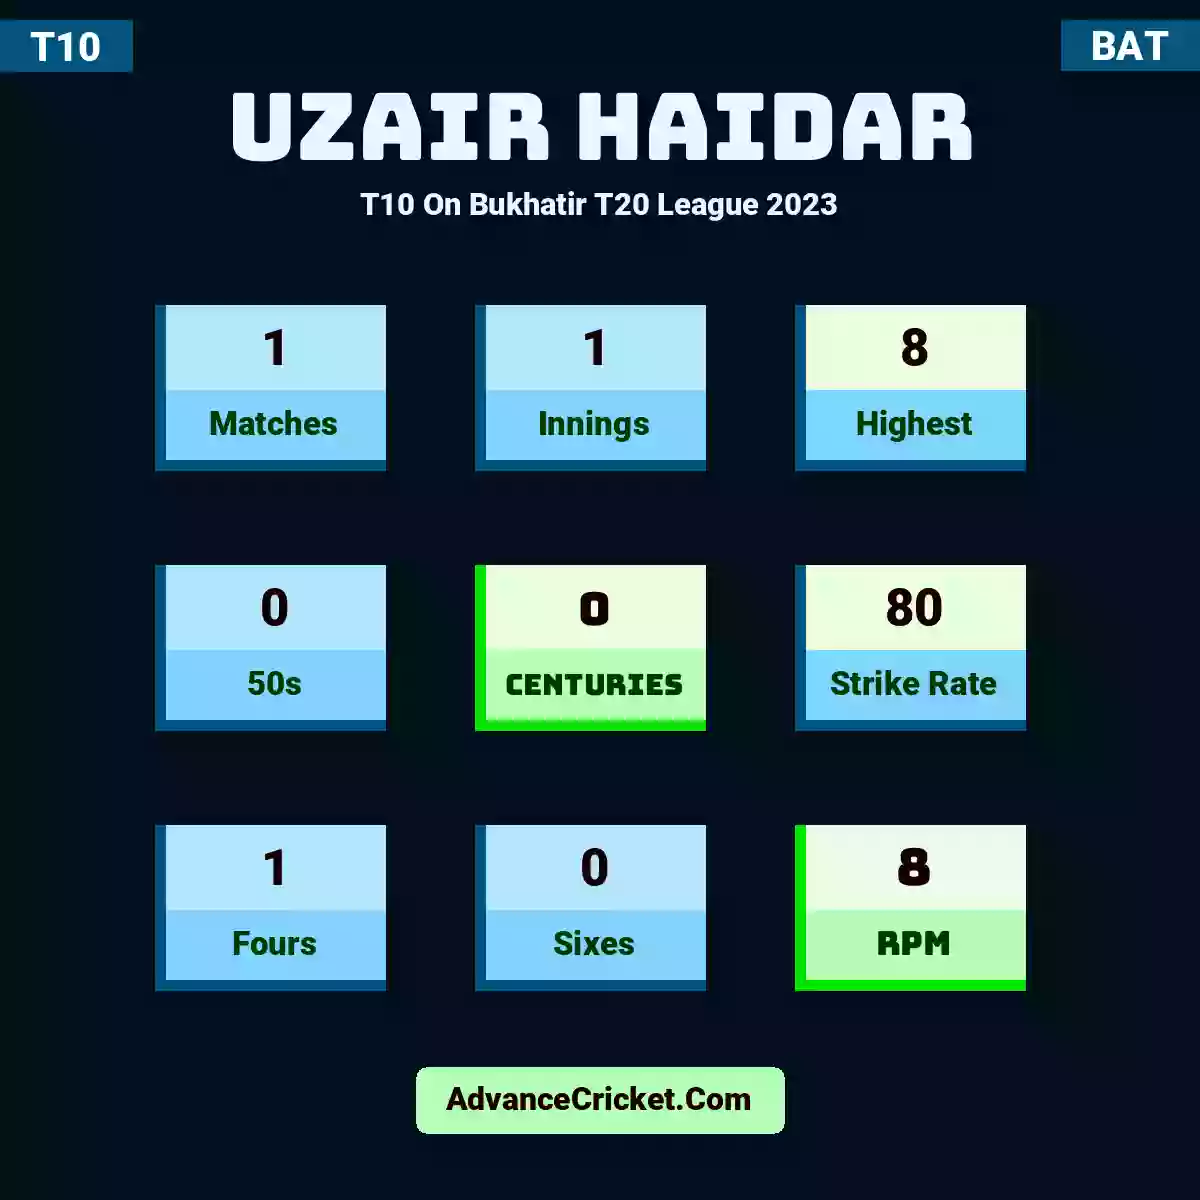 Uzair Haidar T10  On Bukhatir T20 League 2023, Uzair Haidar played 1 matches, scored 8 runs as highest, 0 half-centuries, and 0 centuries, with a strike rate of 80. U.Haidar hit 1 fours and 0 sixes, with an RPM of 8.